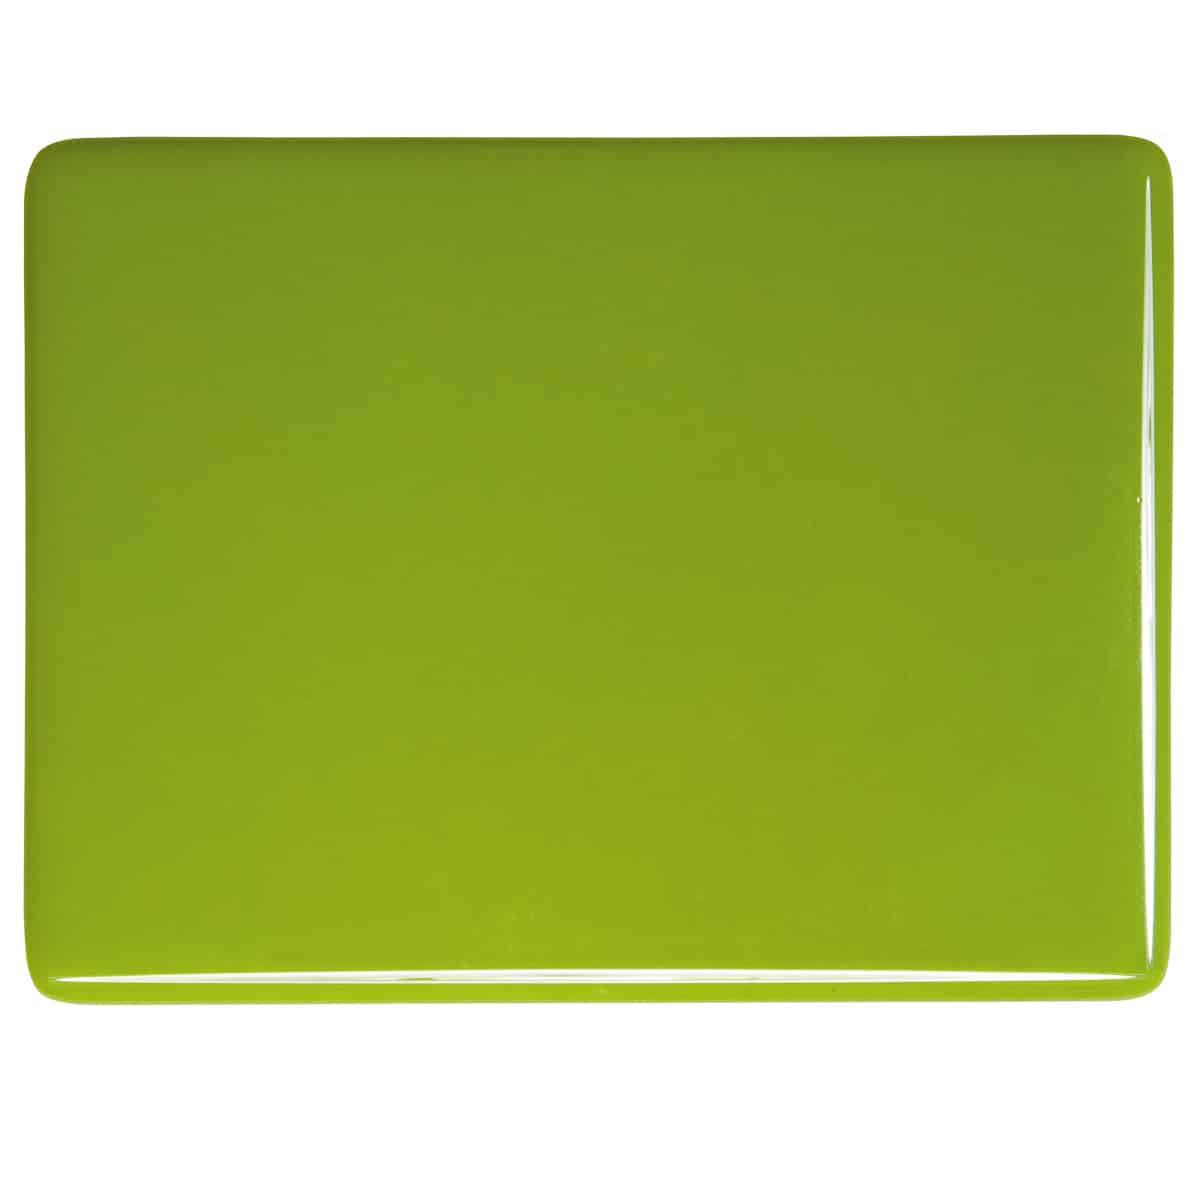 Pea Pod Green Opal sheet glass swatch